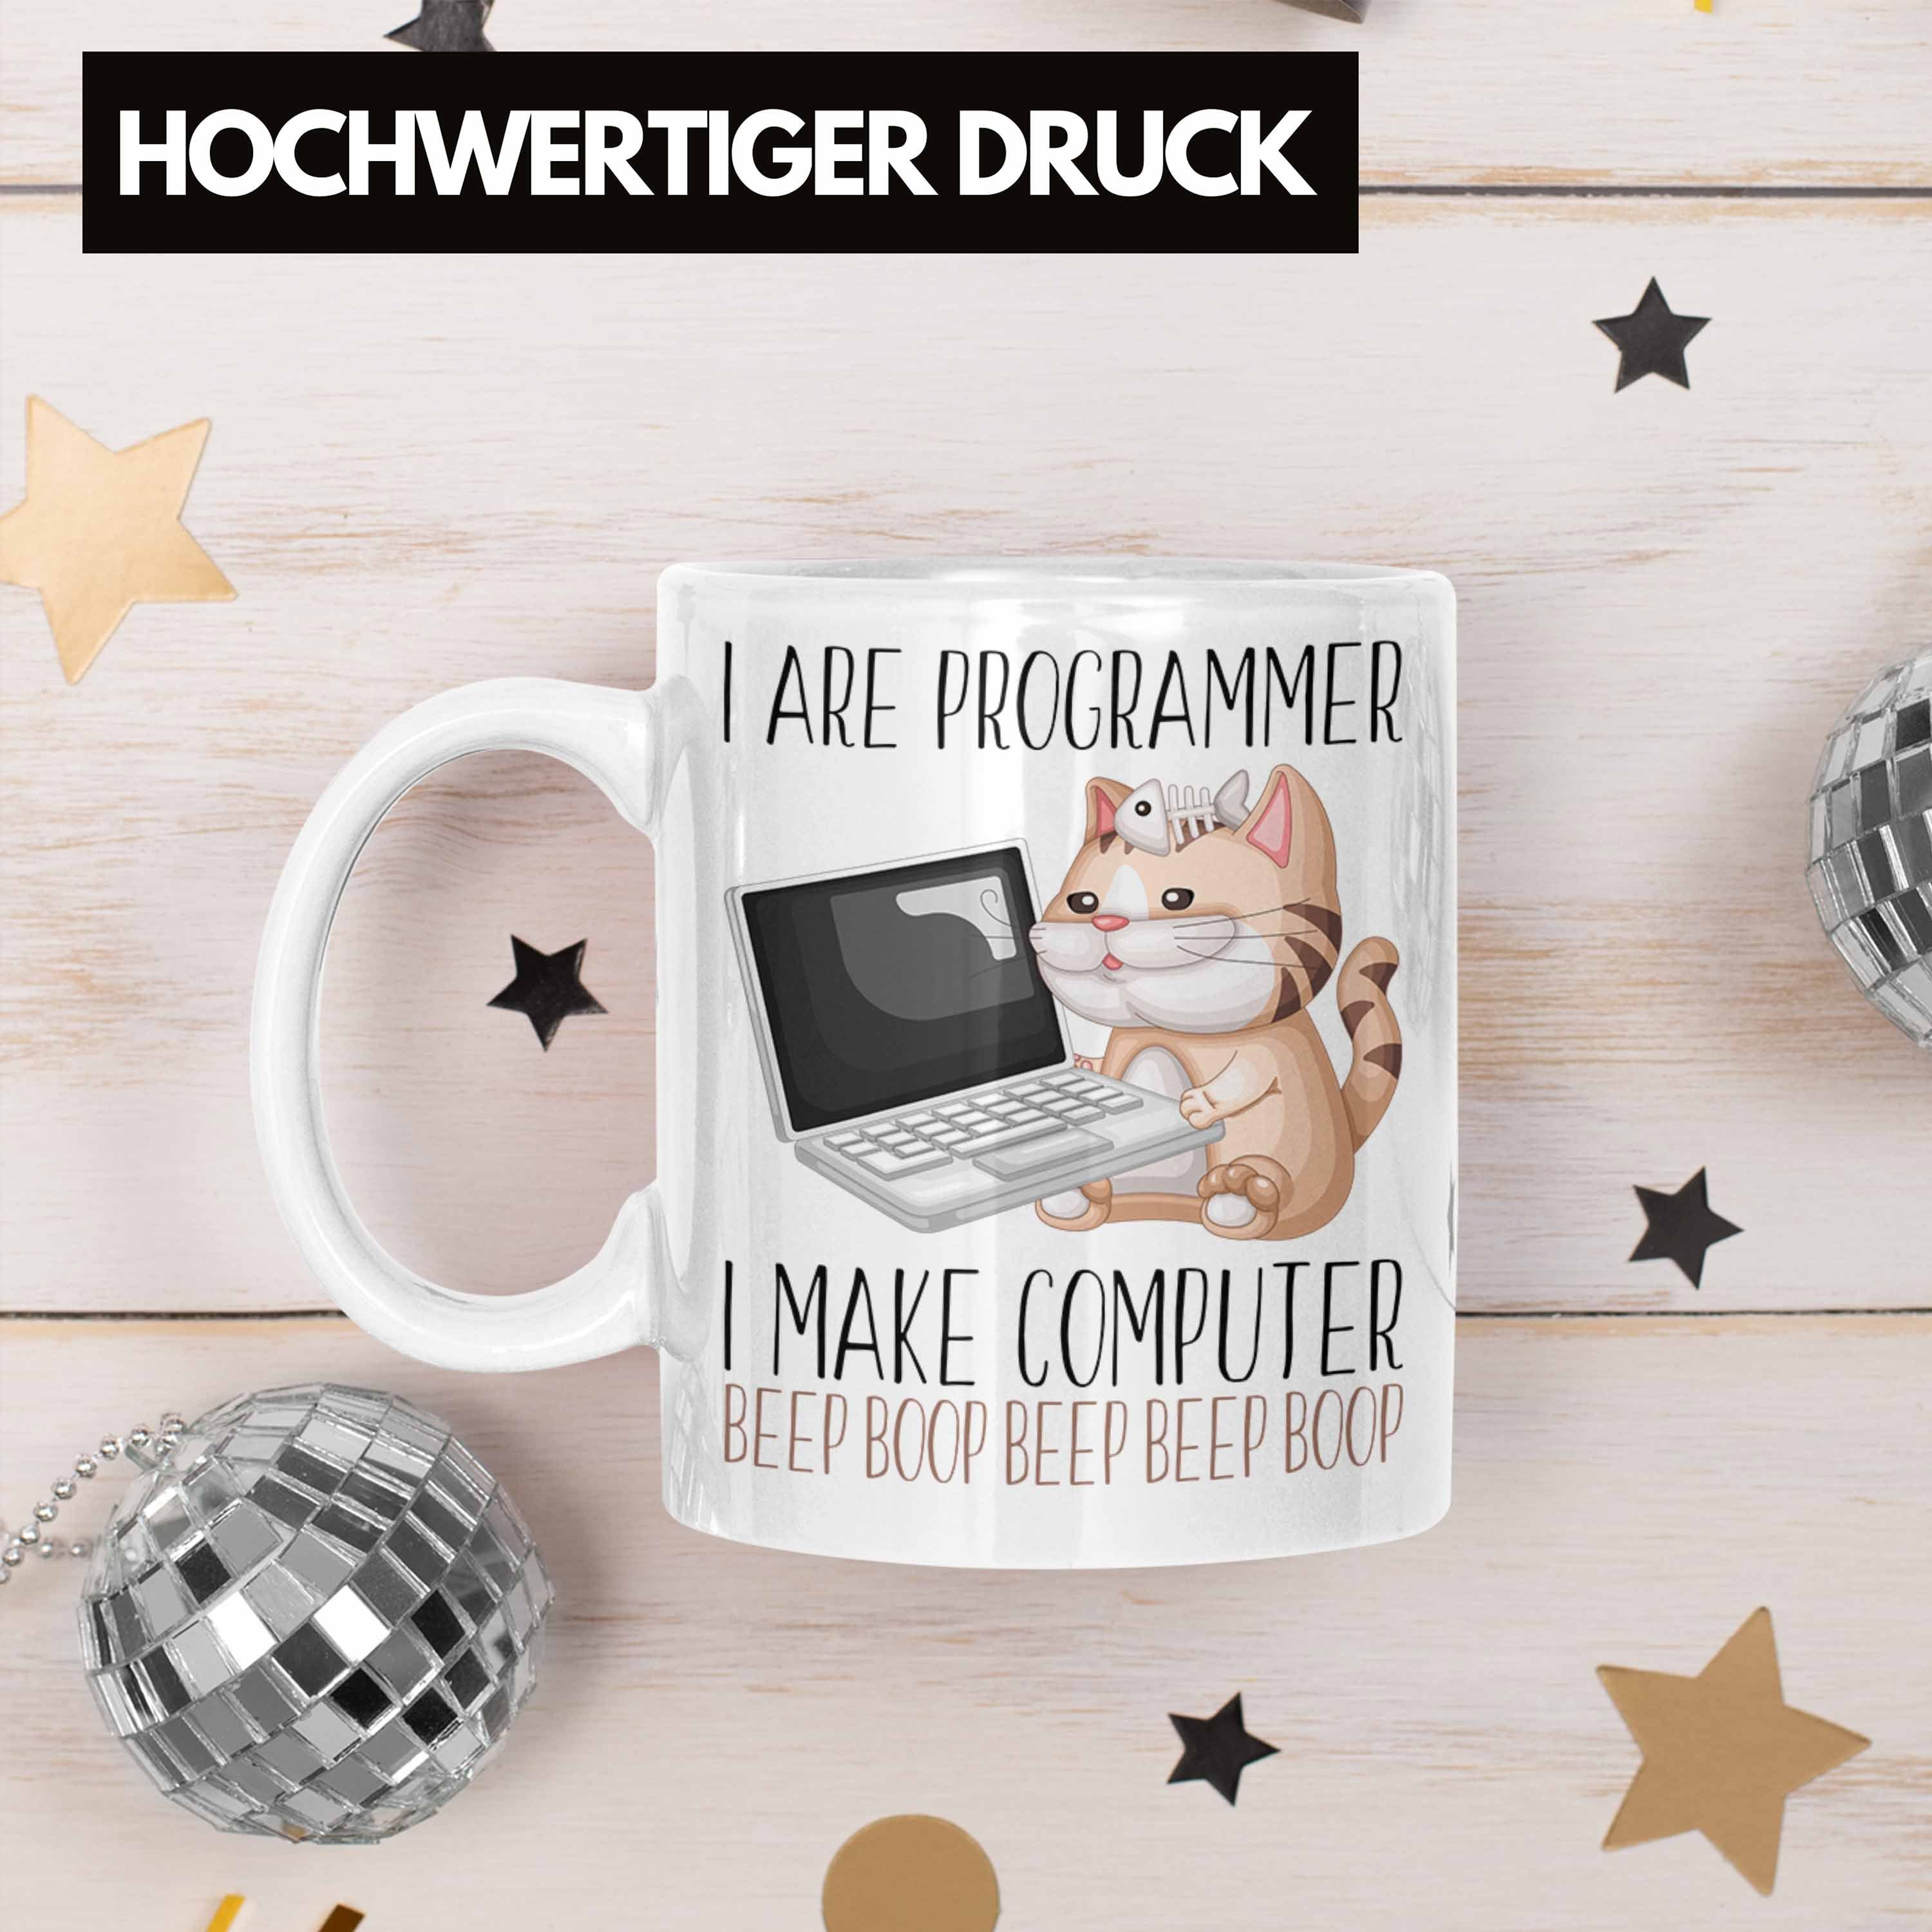 Entwickler Trendation Tasse Geschenk Ges Programmierer IT Weiss Techniker Tasse Kaffee-Becher